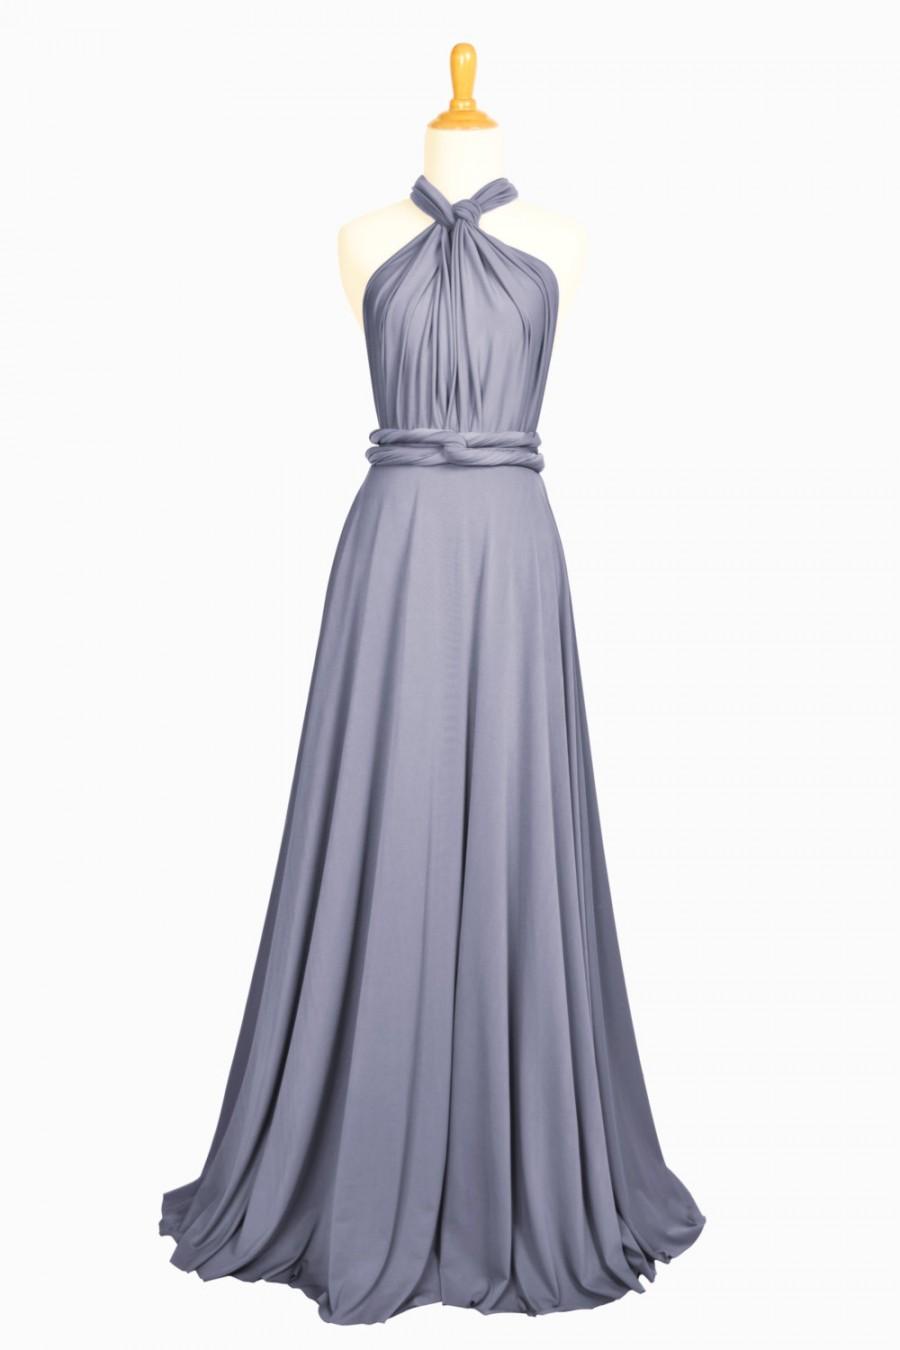 Hochzeit - Bridesmaid Dress  Lilac gray Infinity Dress  floor Length Wrap Convertible Dress L119